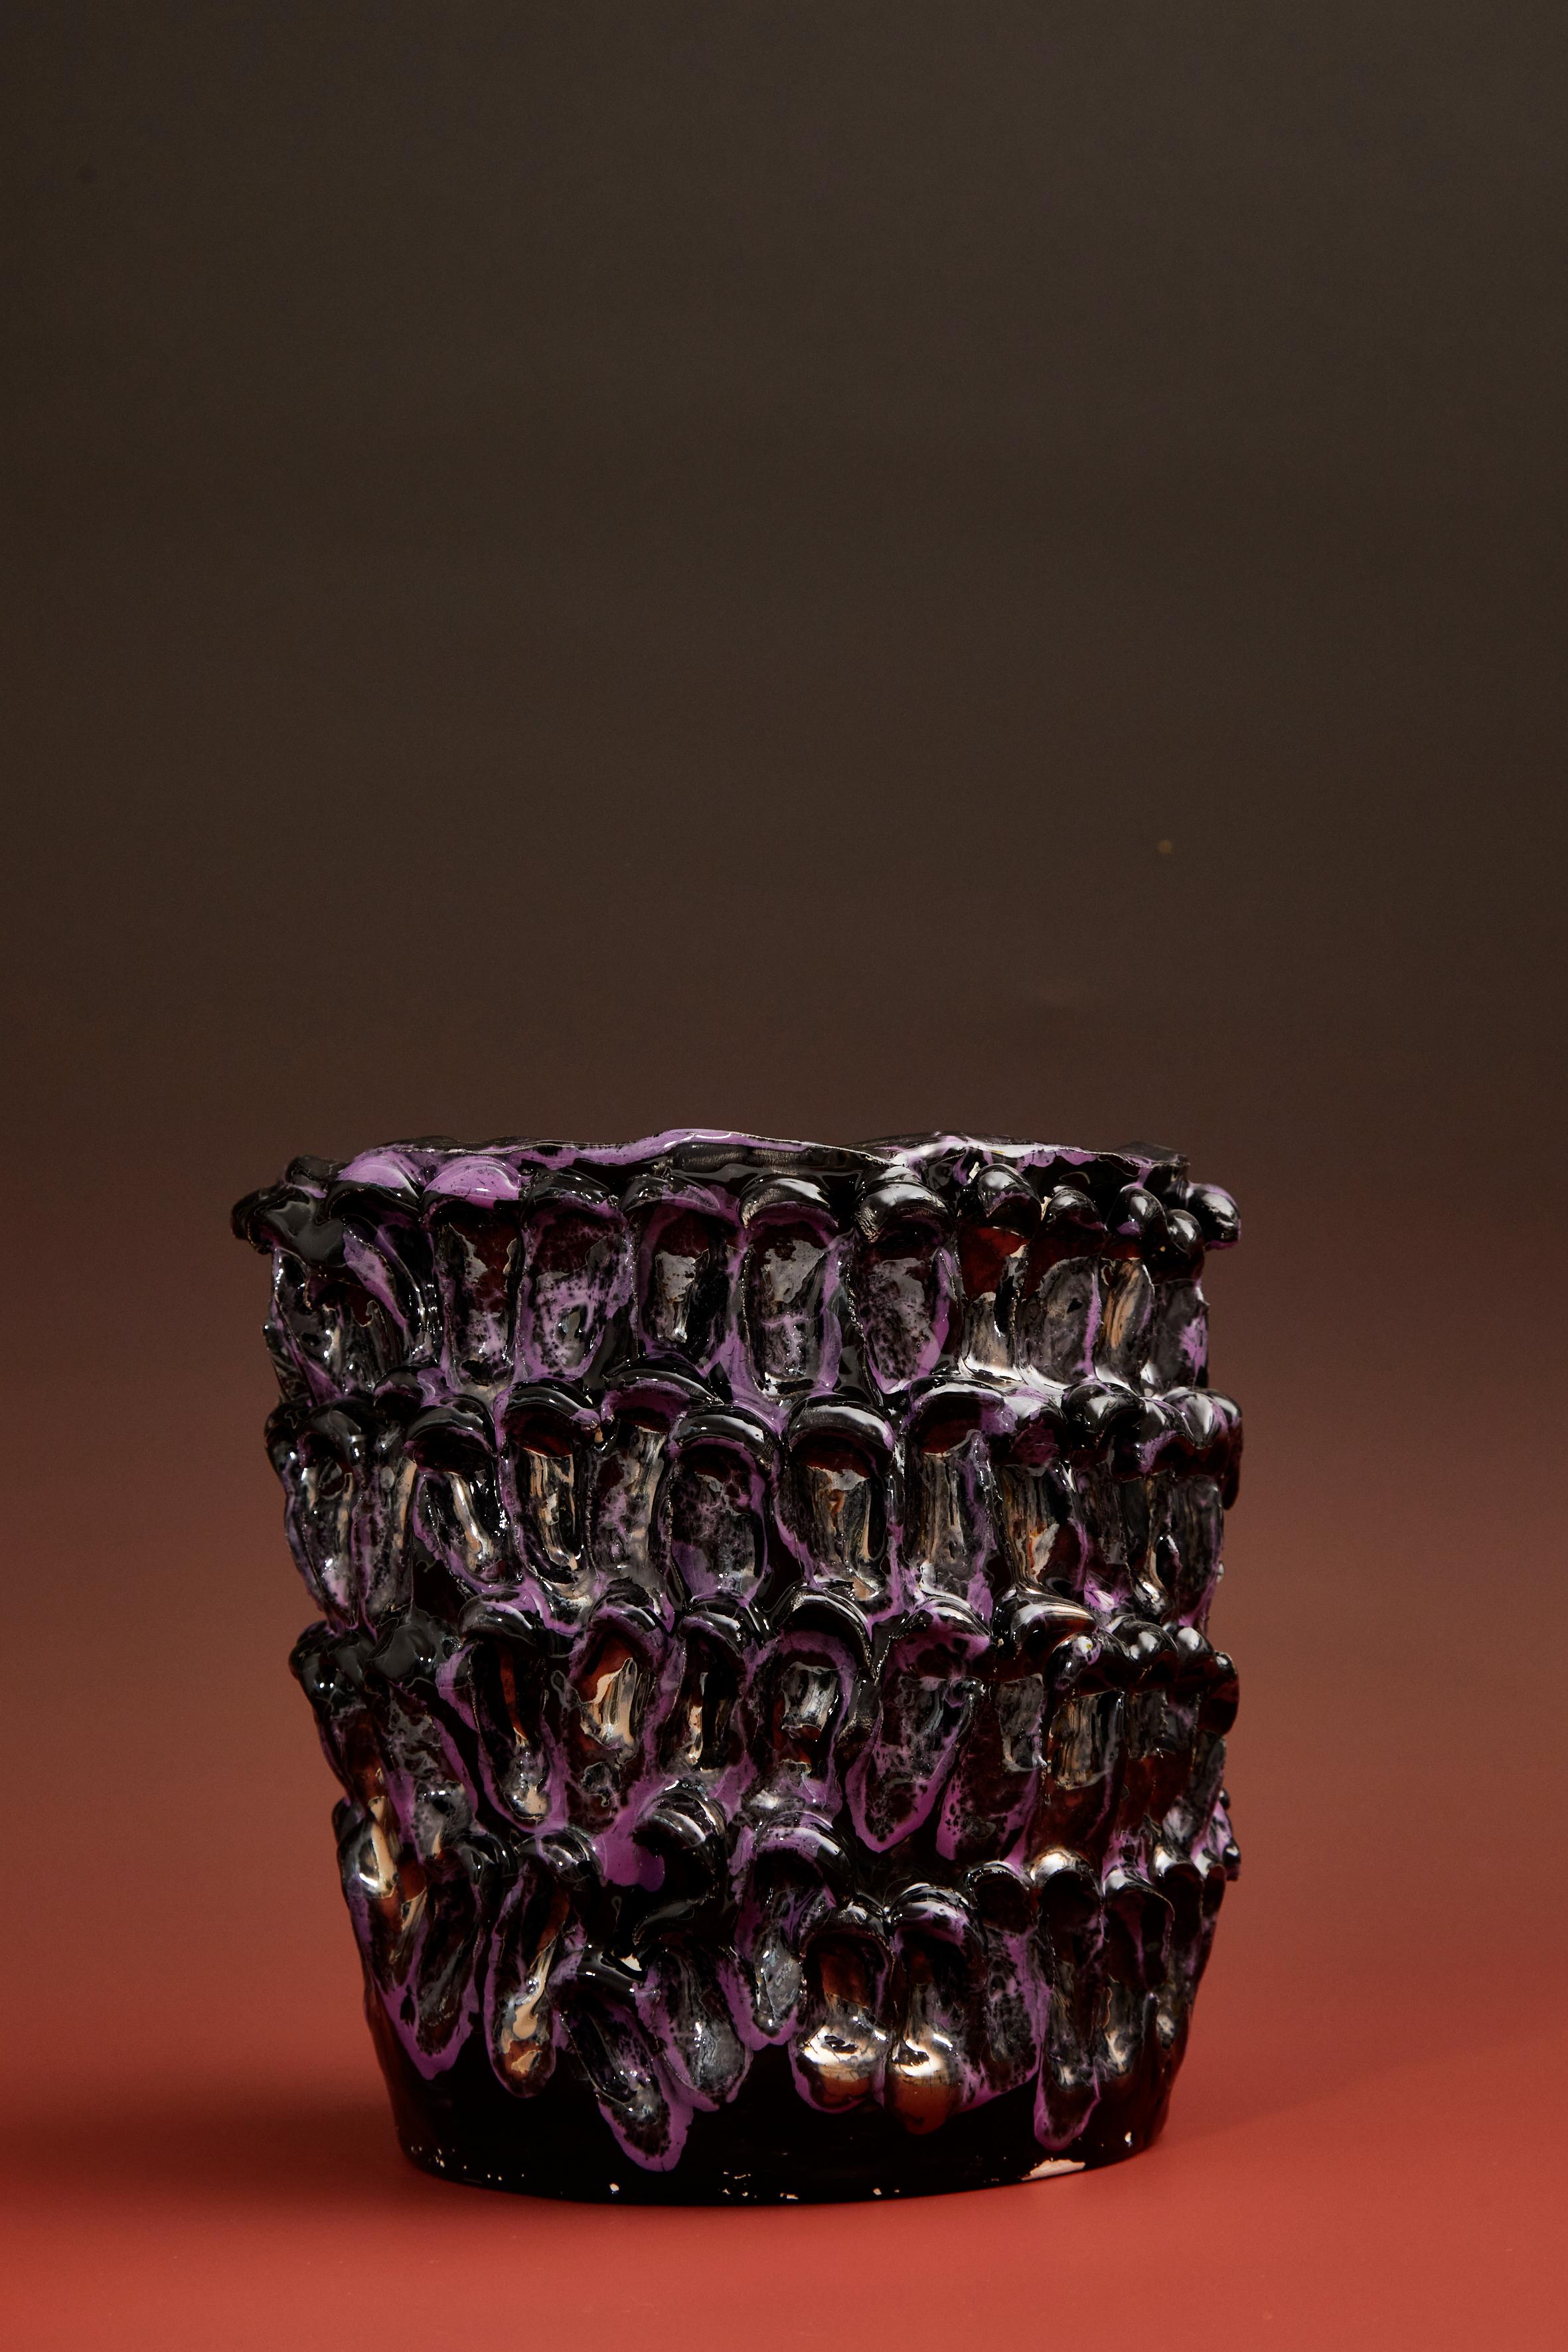 Onda vase in metallic purple and black n. 01 / 20 numbered serie
Unique Handmade Piece
Glazed earthenware by Daria Dazzan
Earthenware, glazes
21 X 21 cm ab.

Handmade earthenware vase by Daria Dazzan, unique piece, numbered.
Daria Dazzan